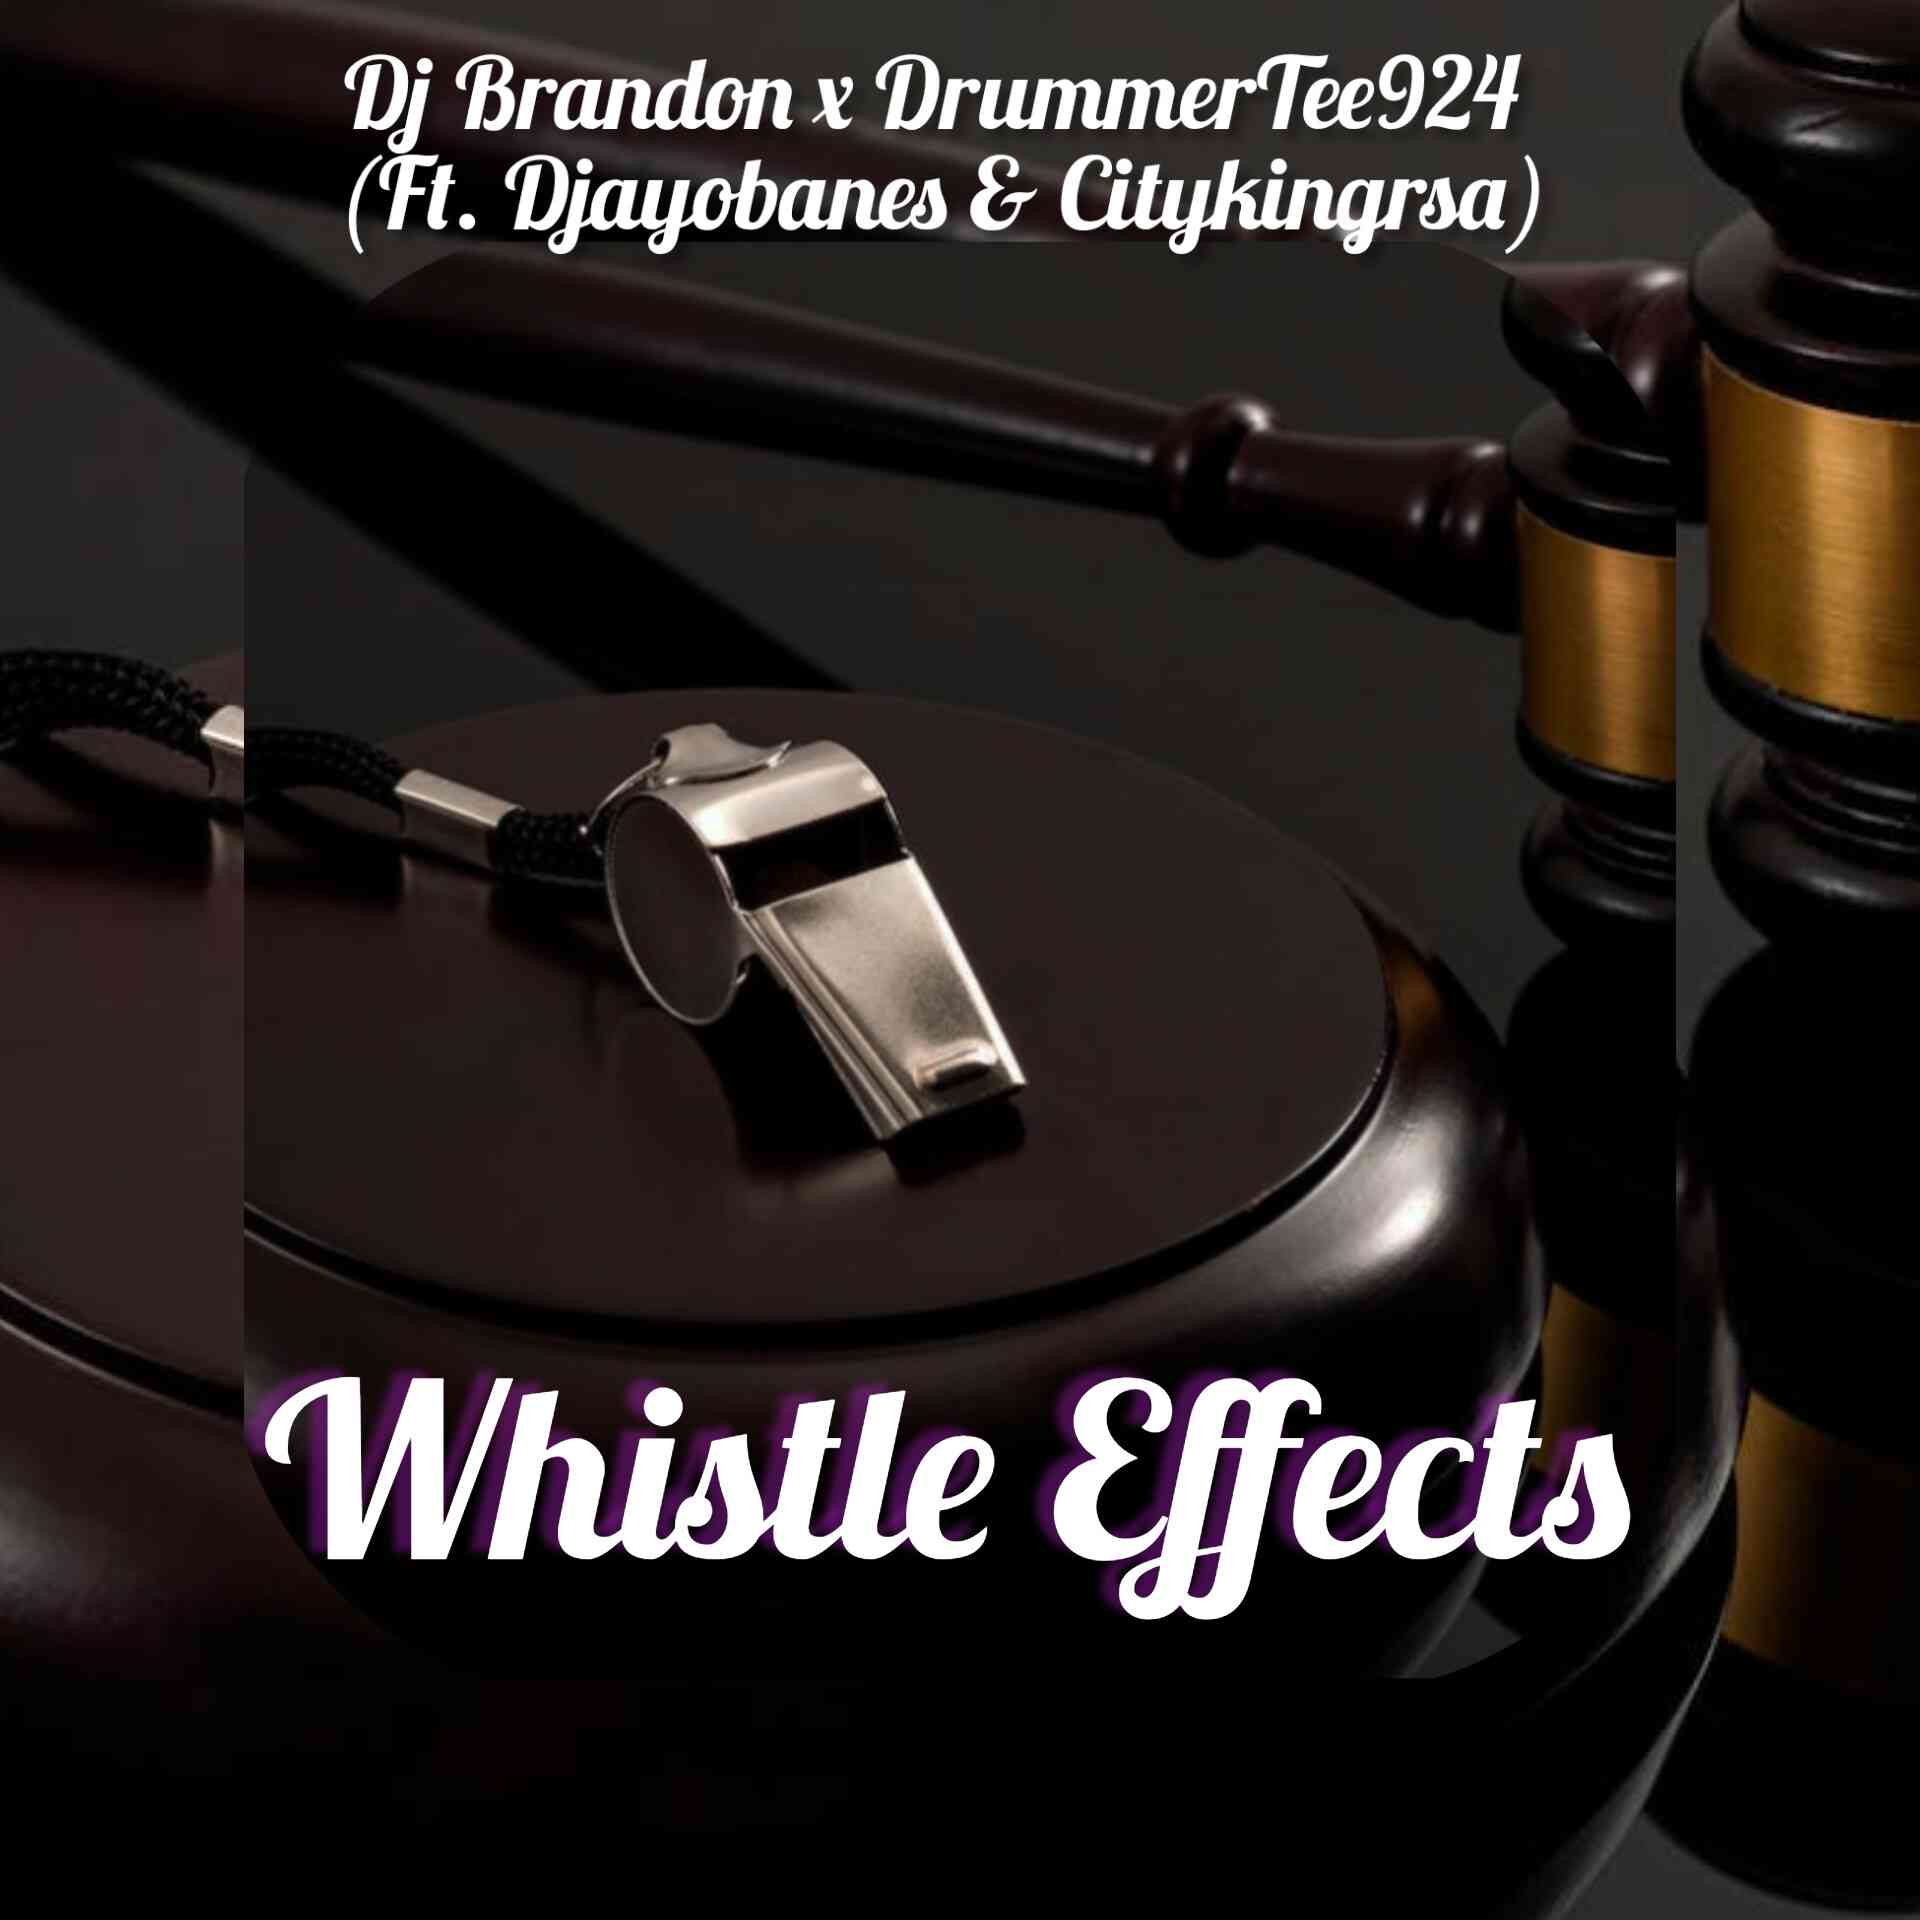 Dj Brandon01 – Whistle Effects 2.0 ft. Dj Ayobanes, DrummeRTee924 & Cityking rsa